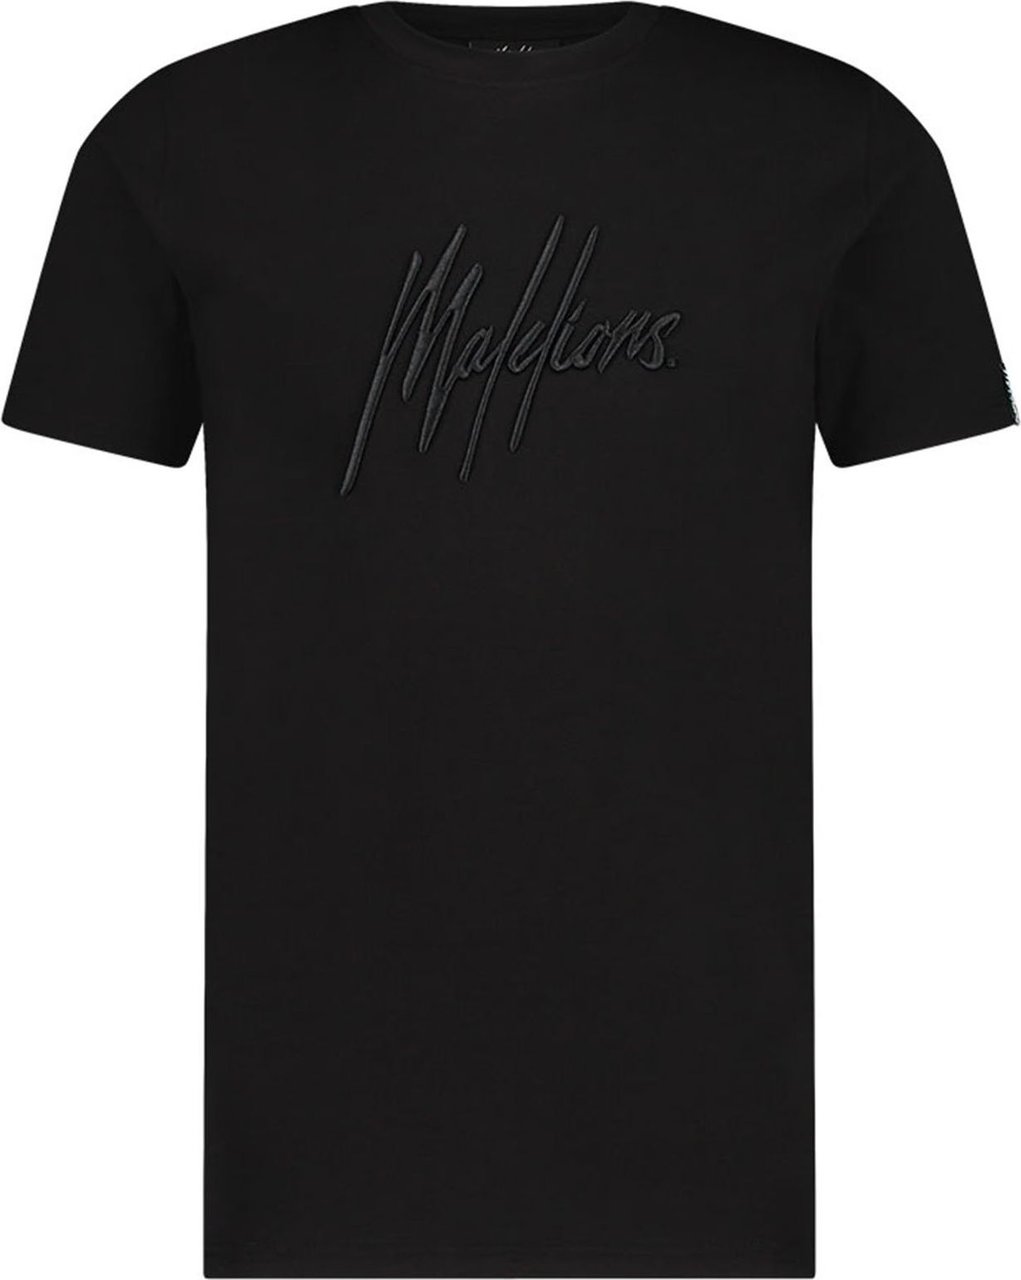 Malelions Essentials T-Shirt - Black Black